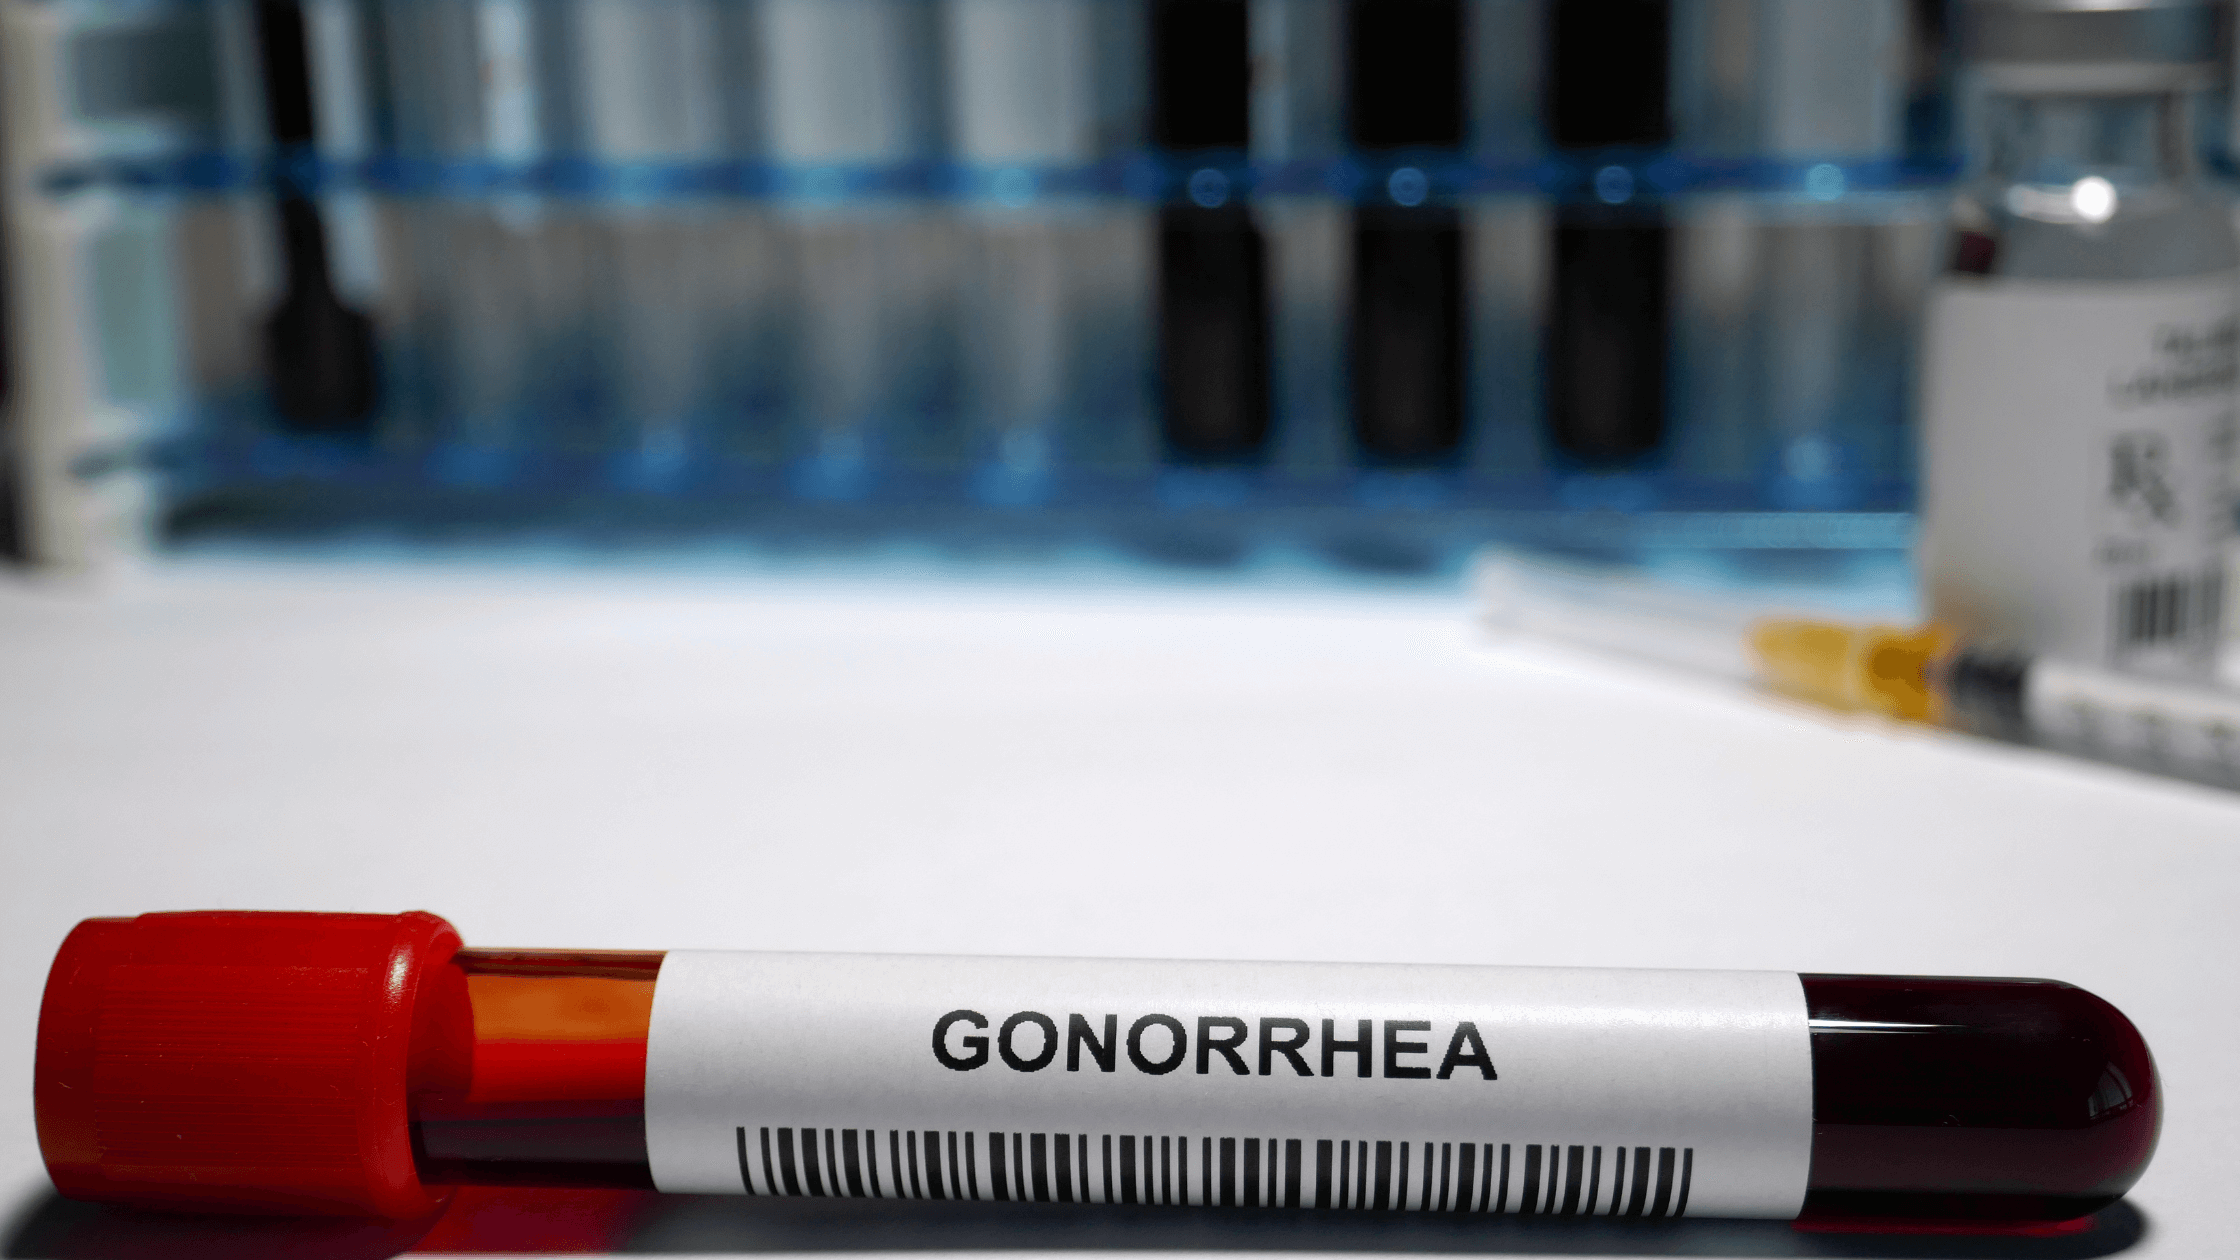 blood-gonorrhea-test